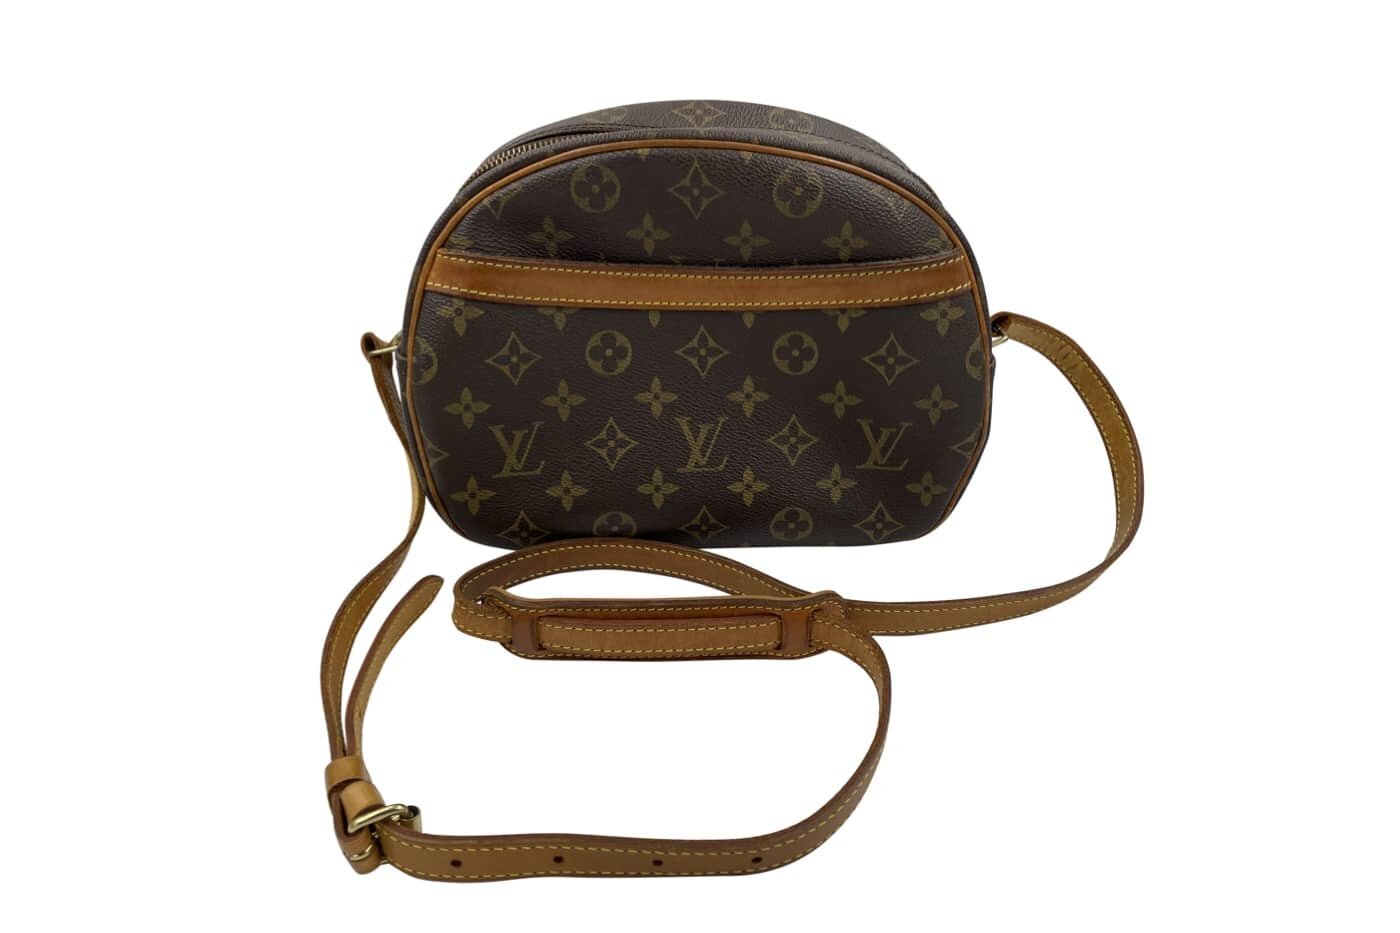 ✨DIY: Instantly Rehab Your Louis Vuitton Bag // Angelus Vachetta